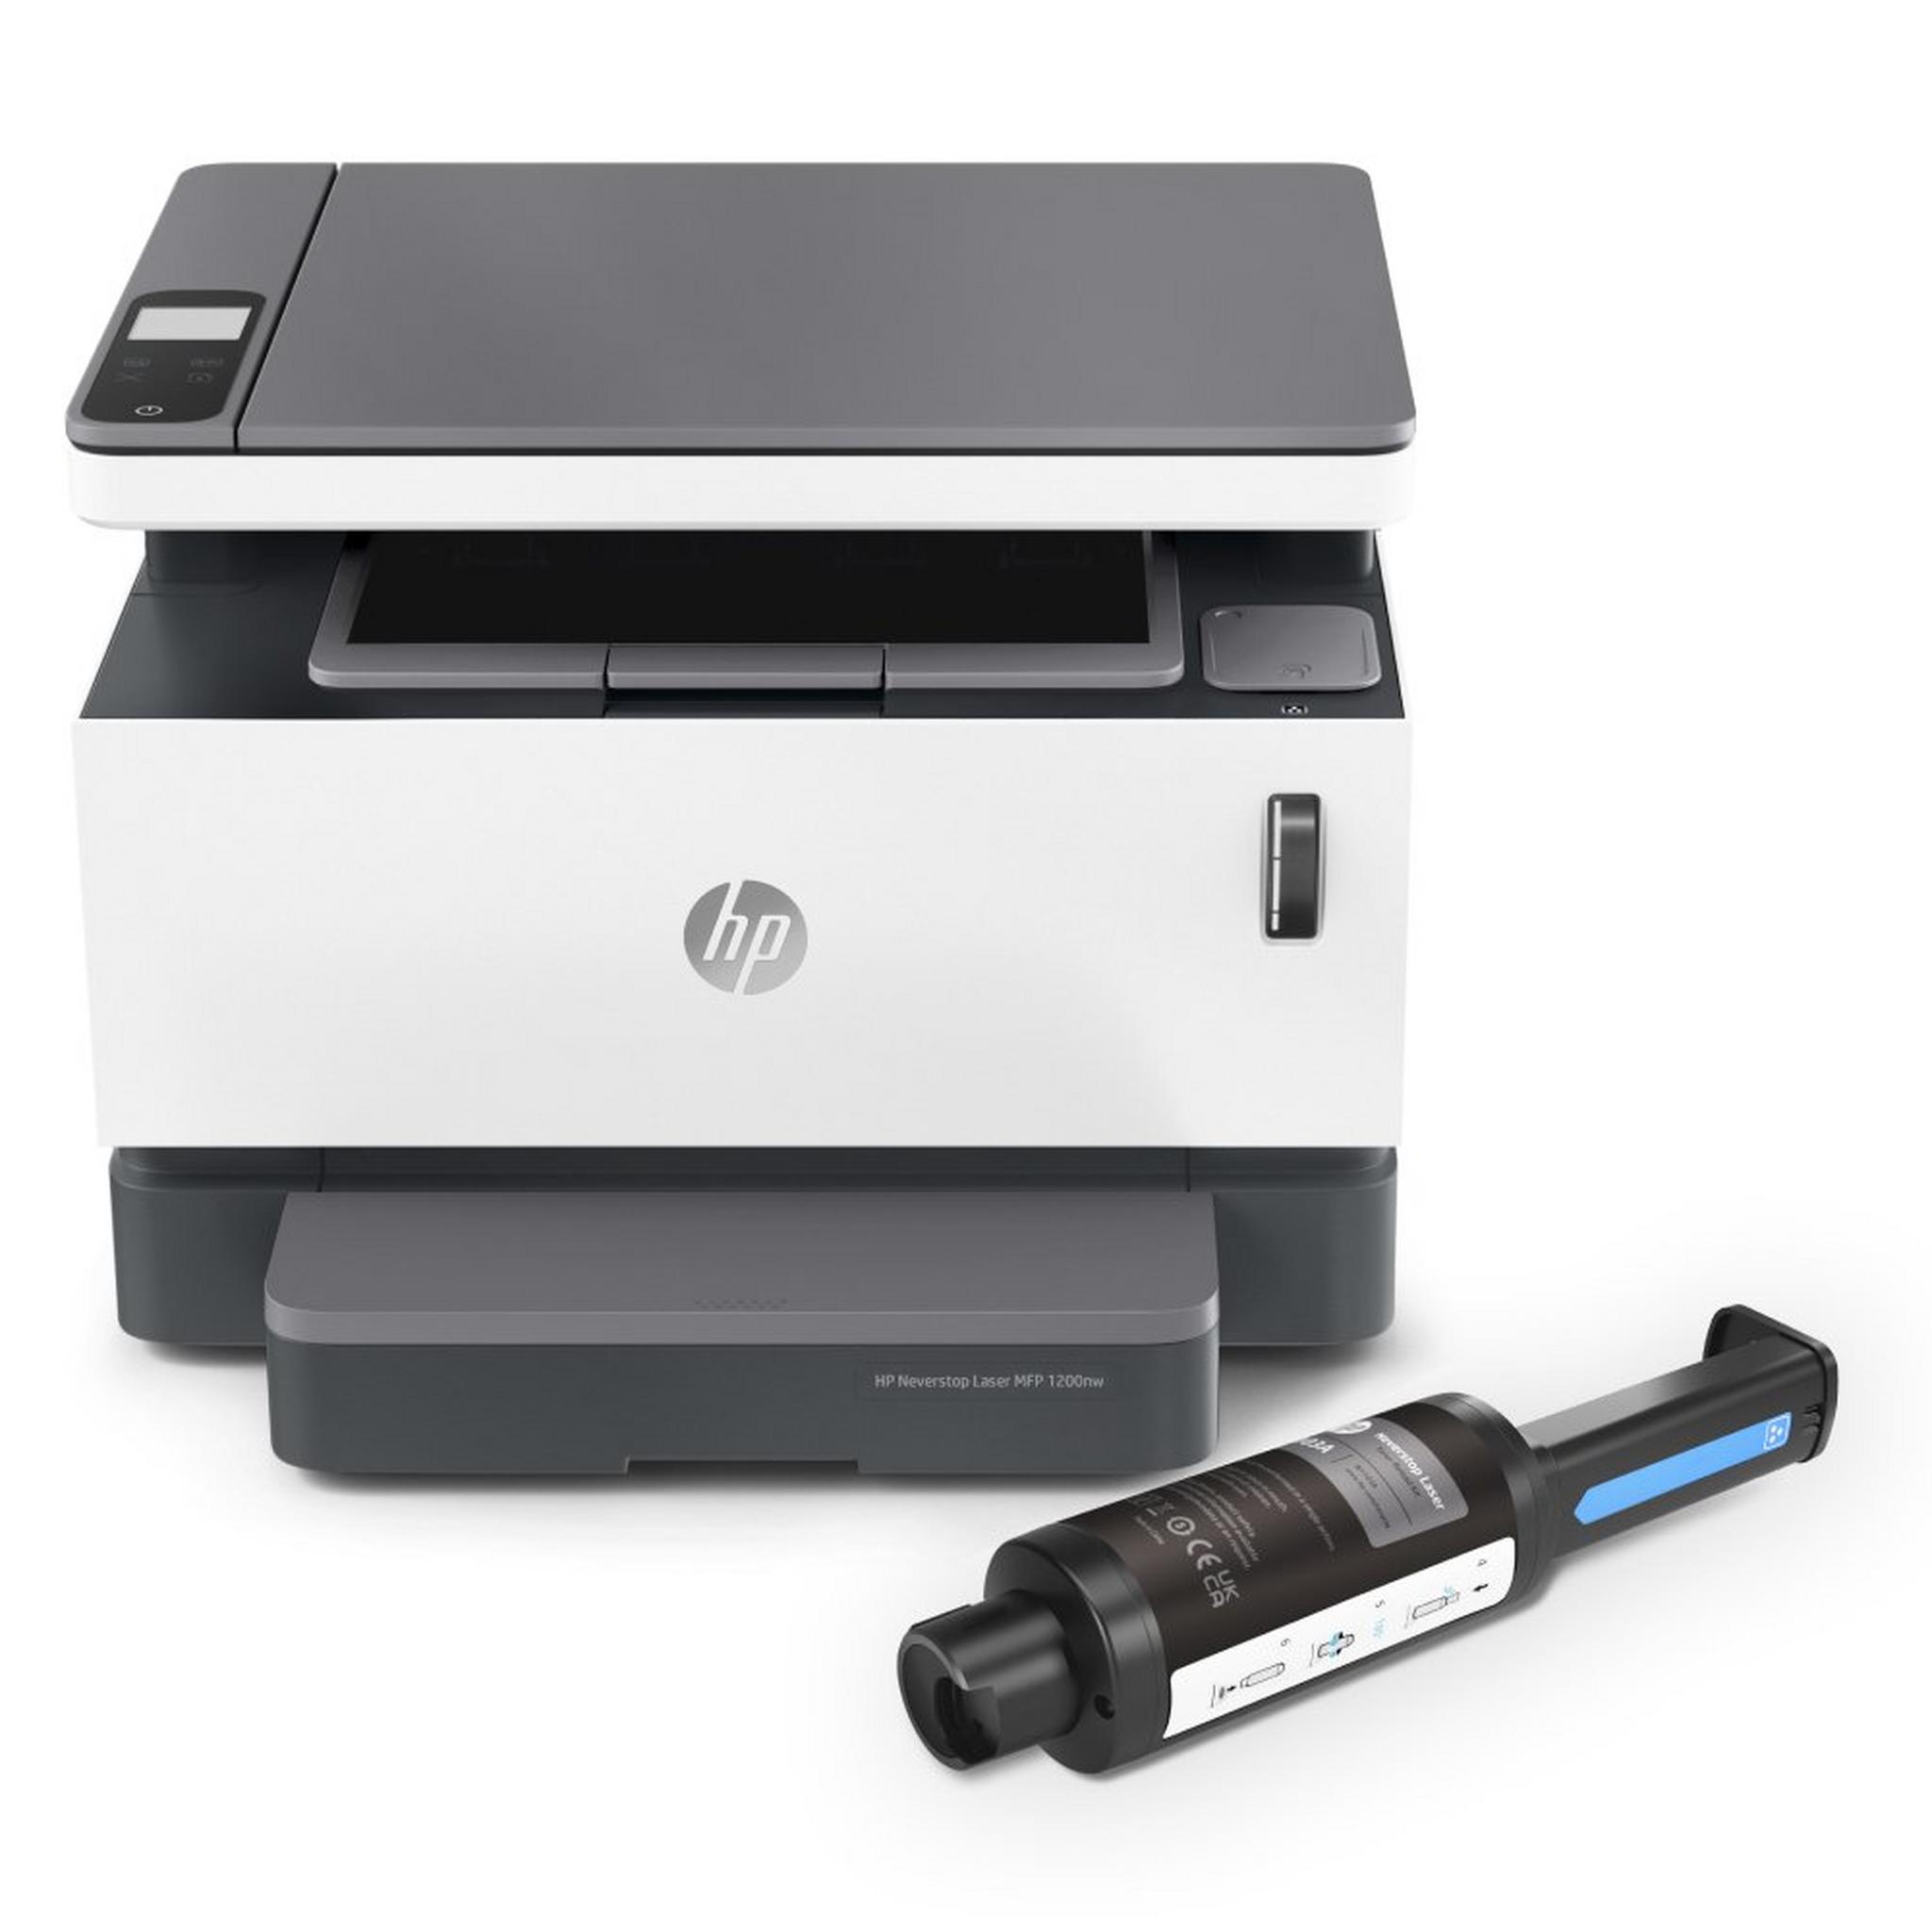 HP Neverstop 103A Laser Toner Cartridge - Black